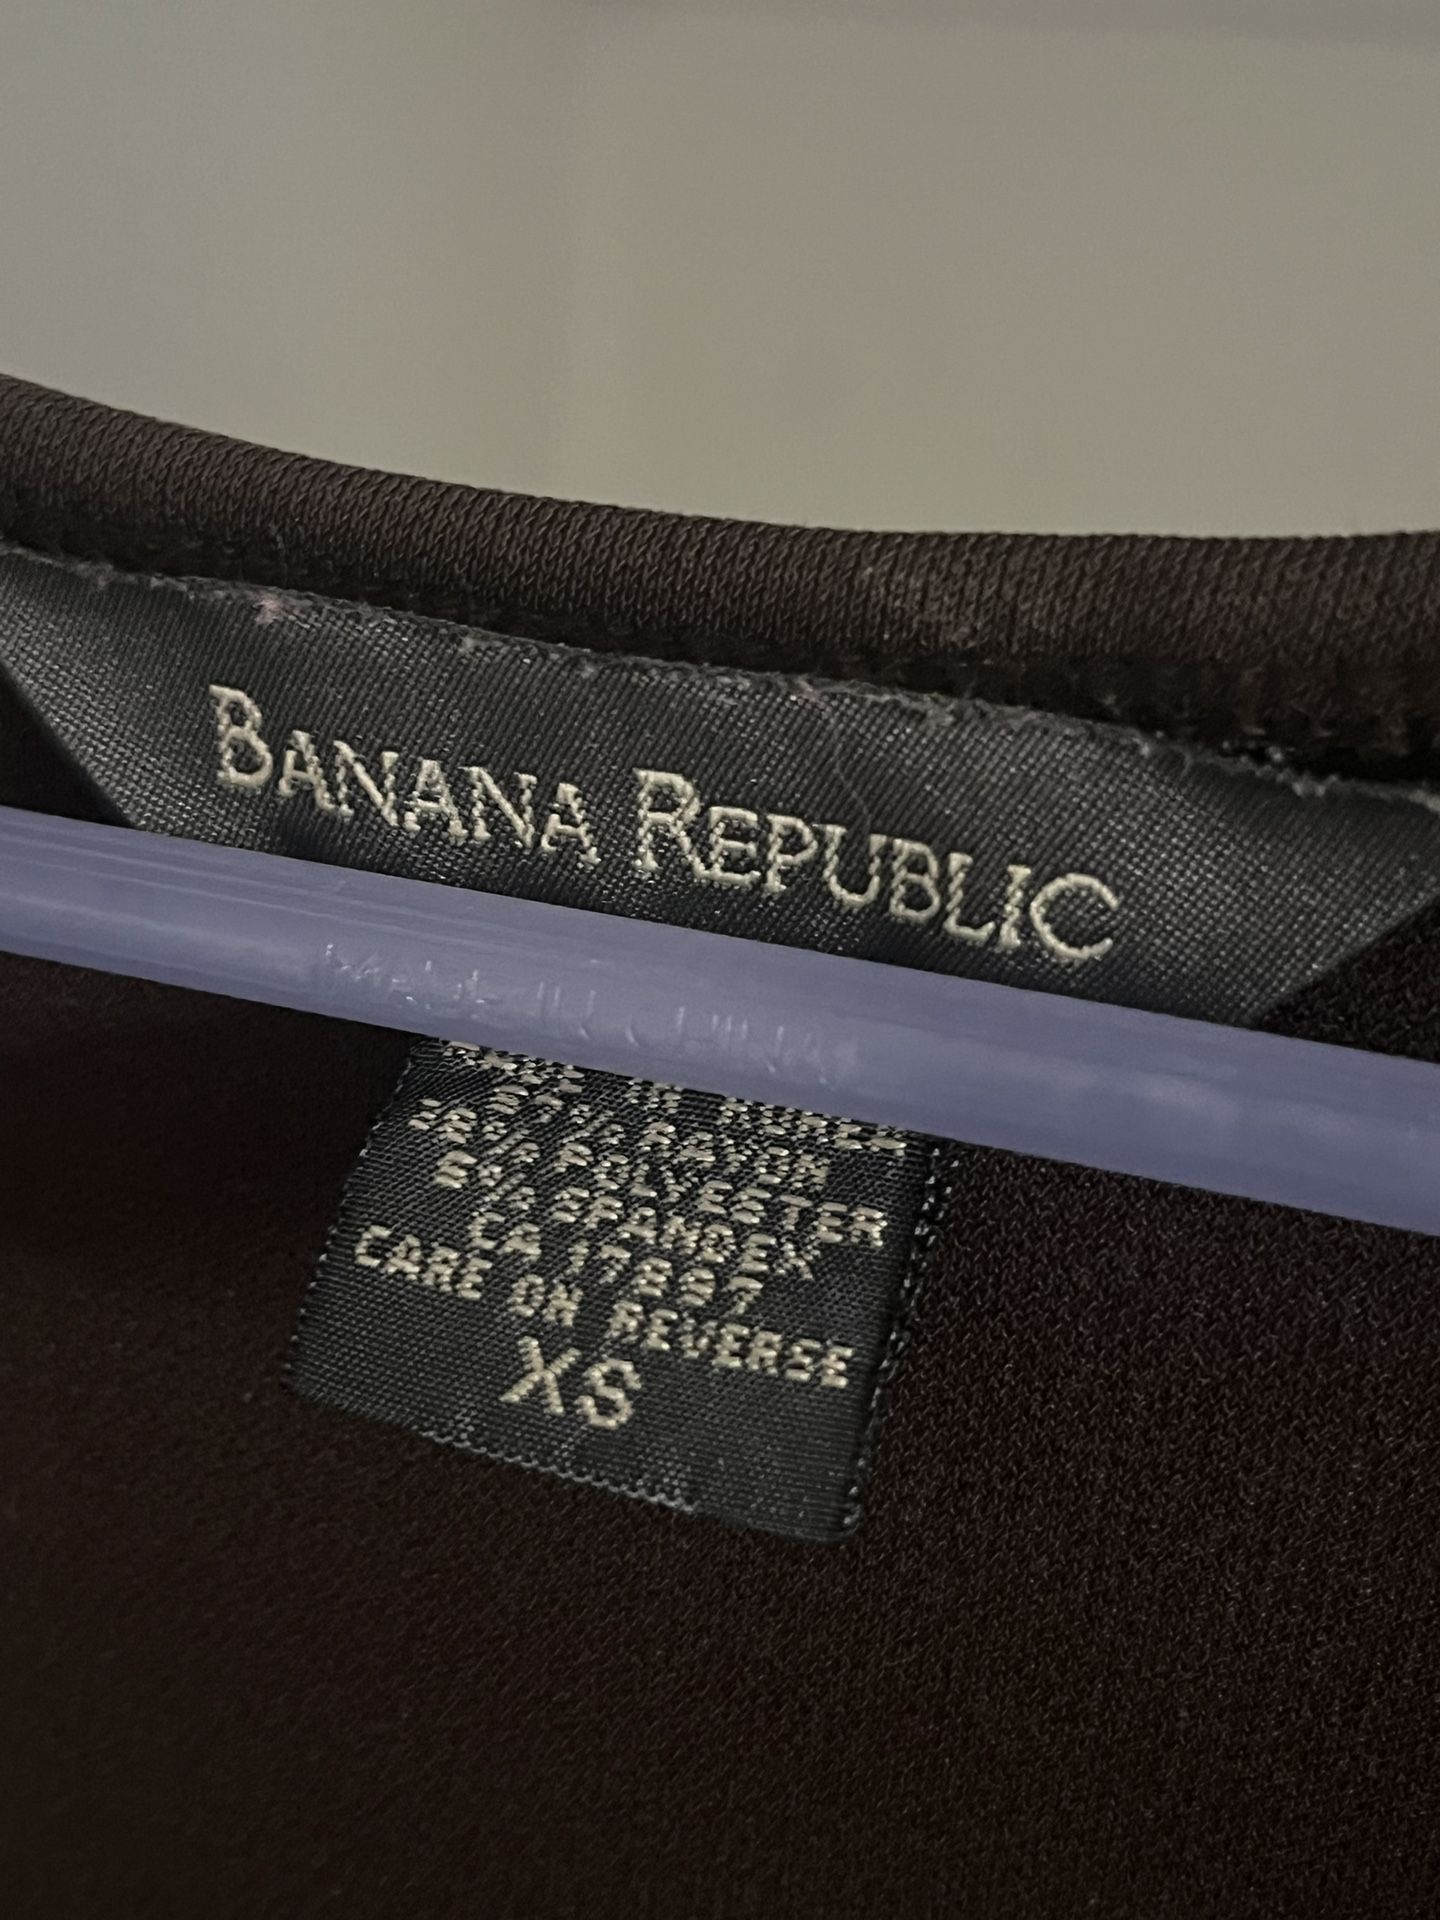 Banana Republic XS Chocolate Brown Tshirt Dress